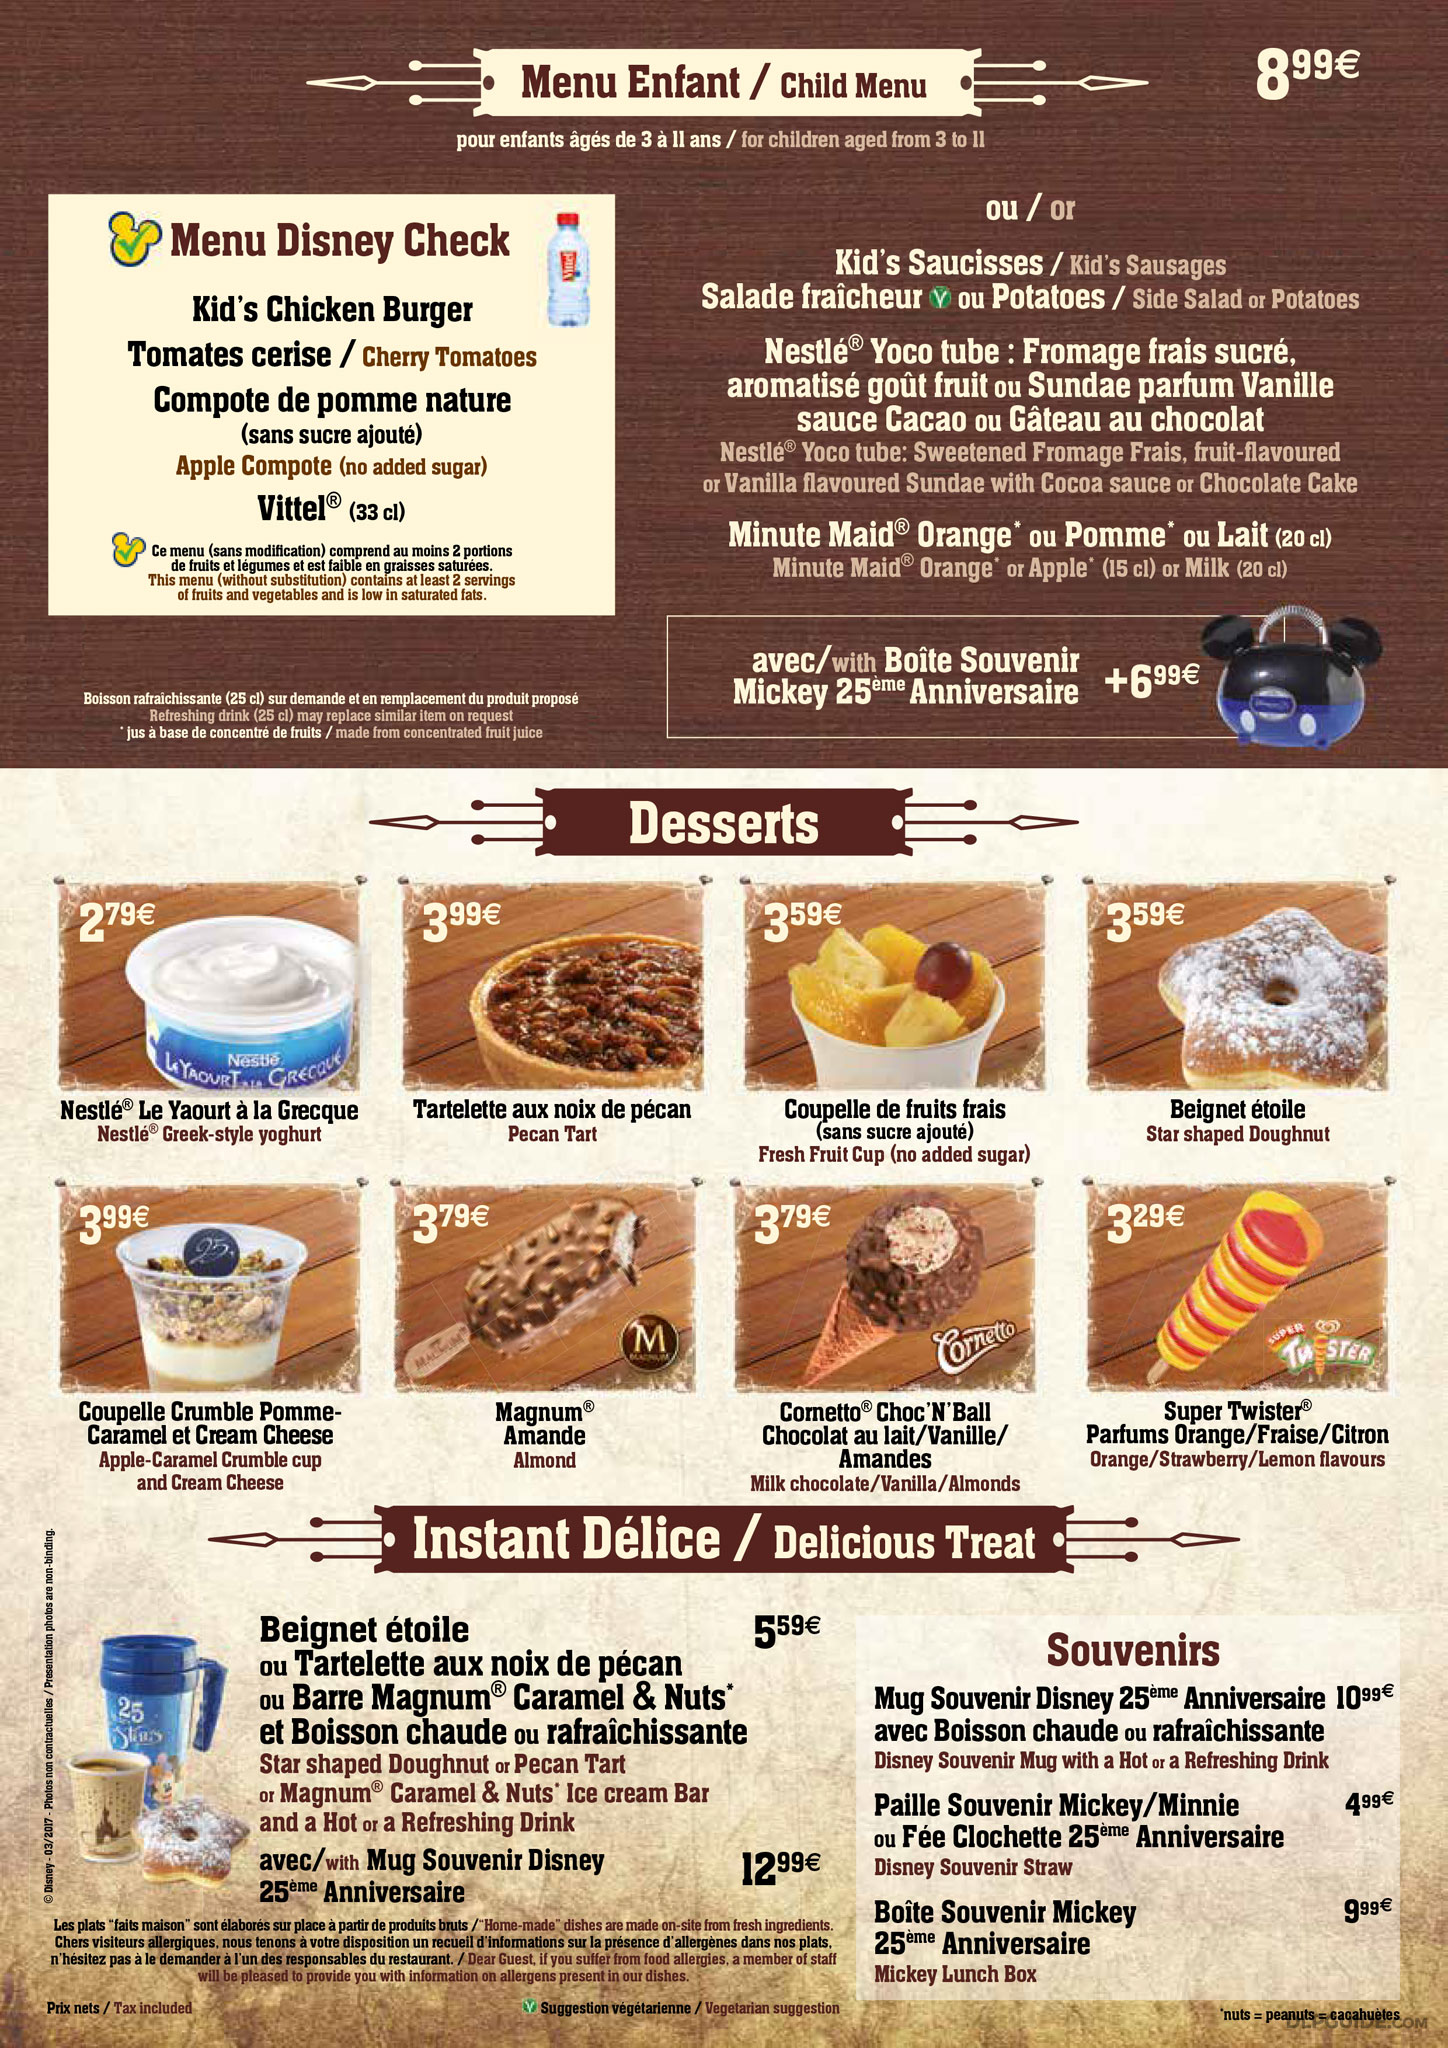 Cowboy Cookout Barbecue menu — DLP Guide • Disneyland ...
